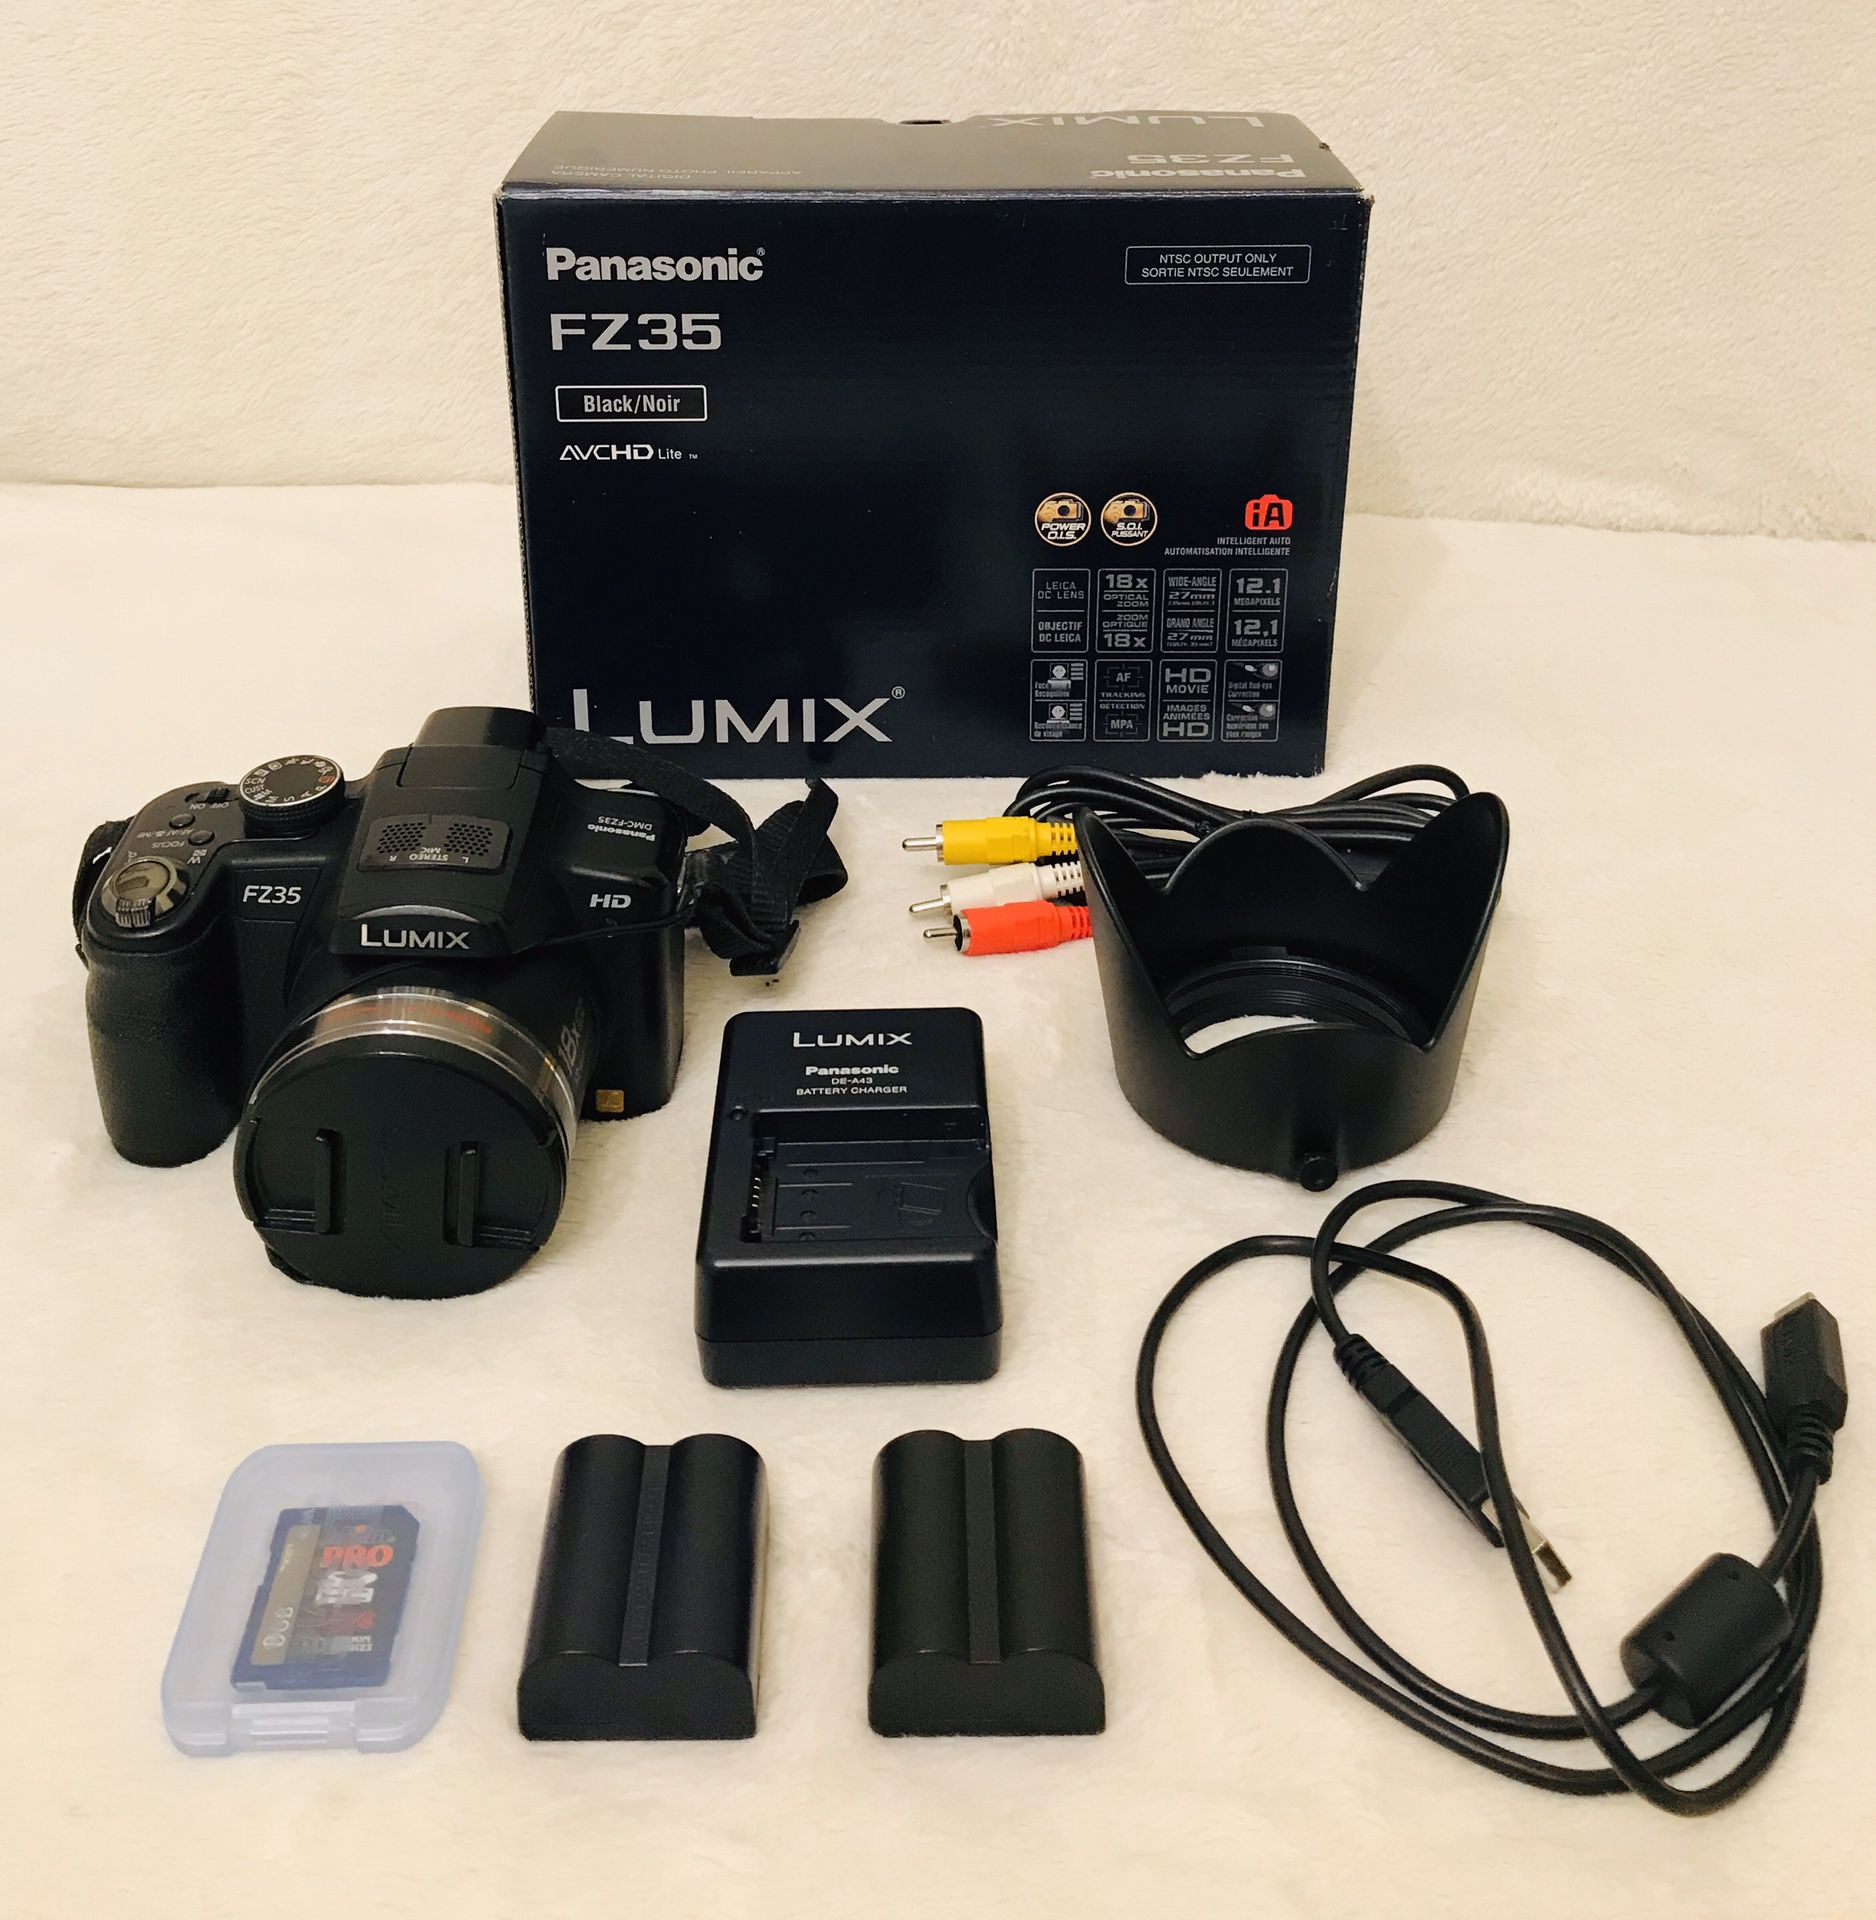 Panasonic LUMIX DMC-FZ35 Digital Camera